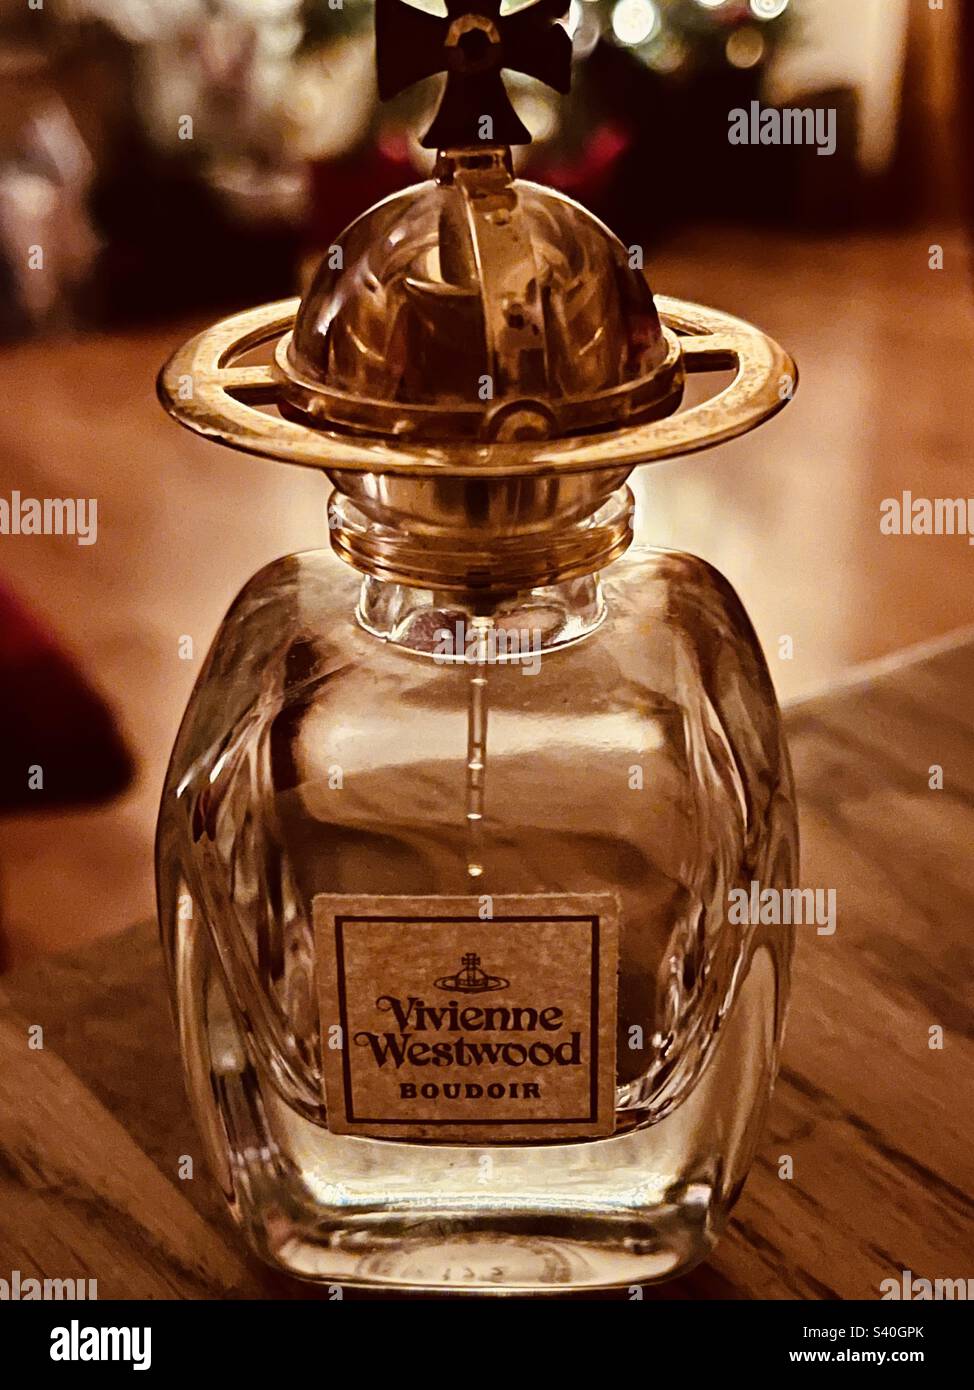 Vivienne Westwood Boudoir profumo in luci di Natale somber Foto stock -  Alamy